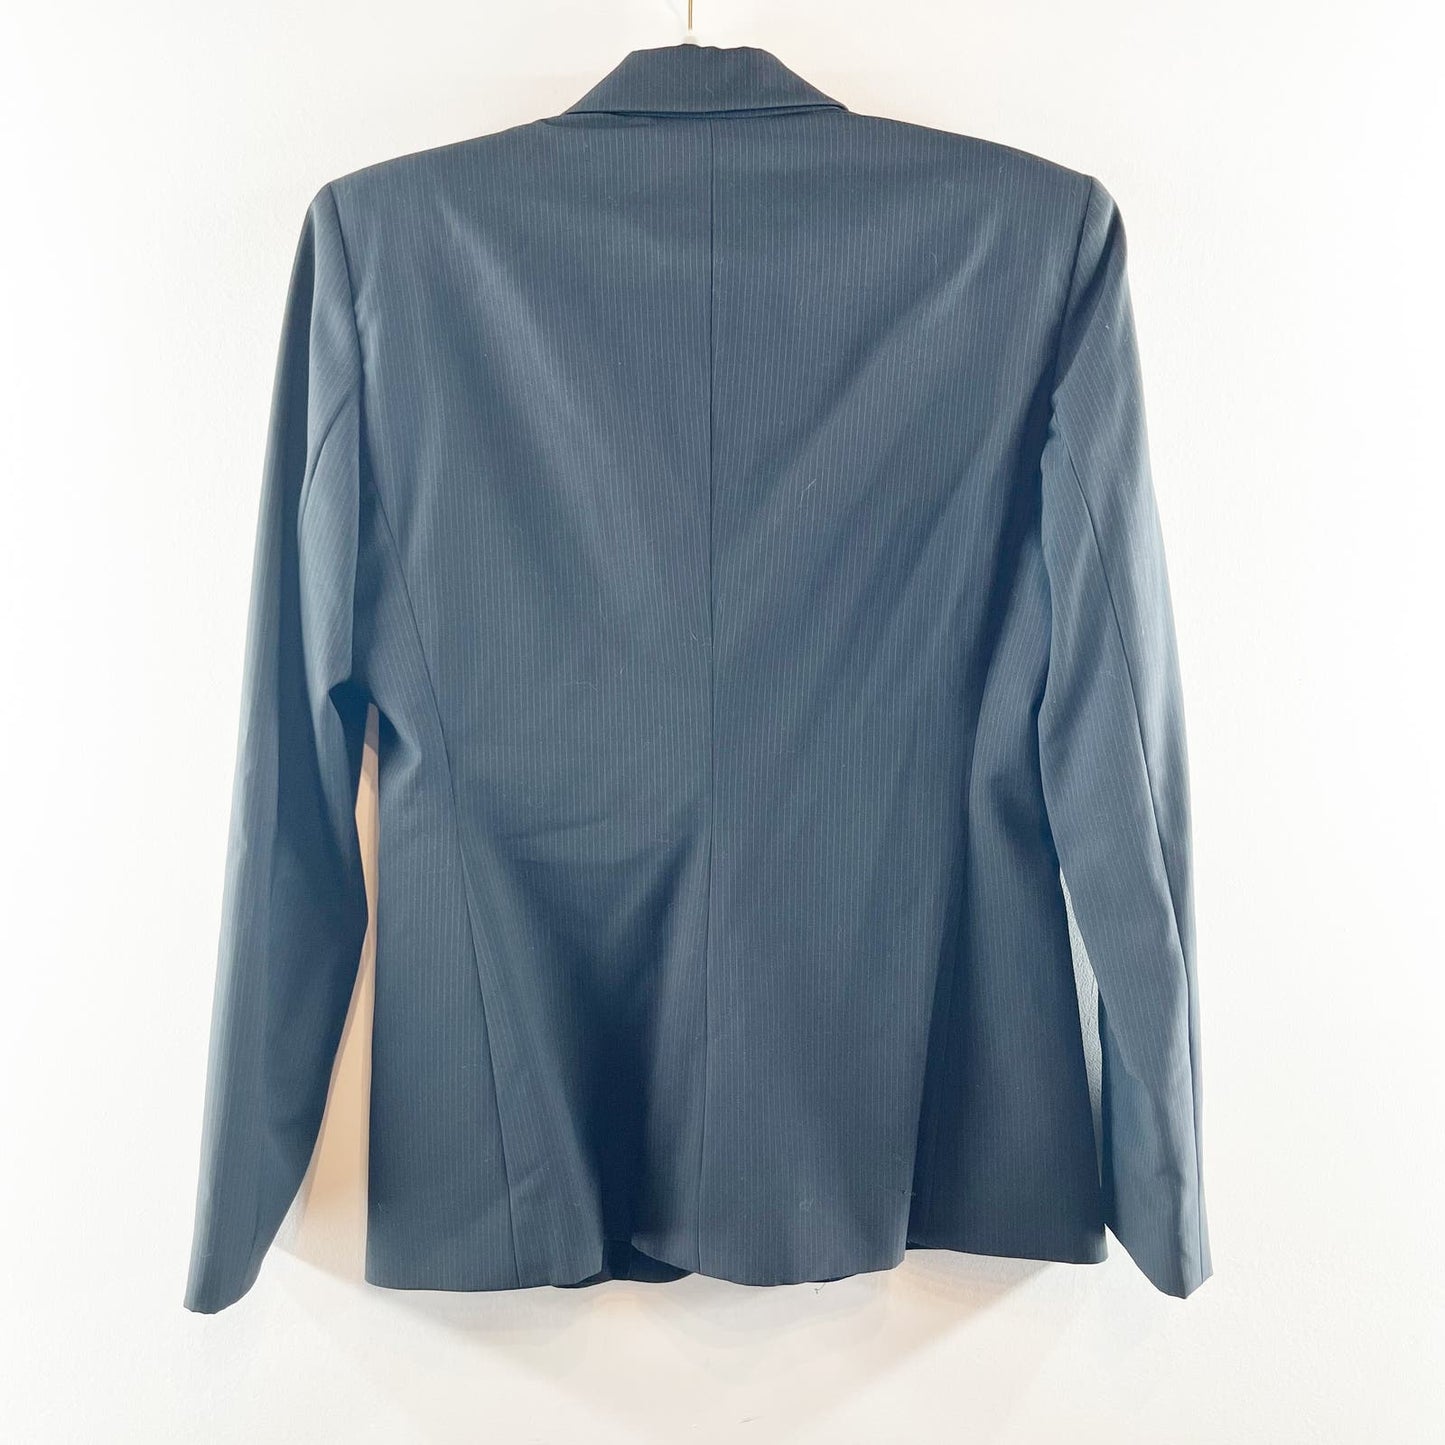 Armani Collezioni Single Breasted Blazer Suit Jacket Black 8